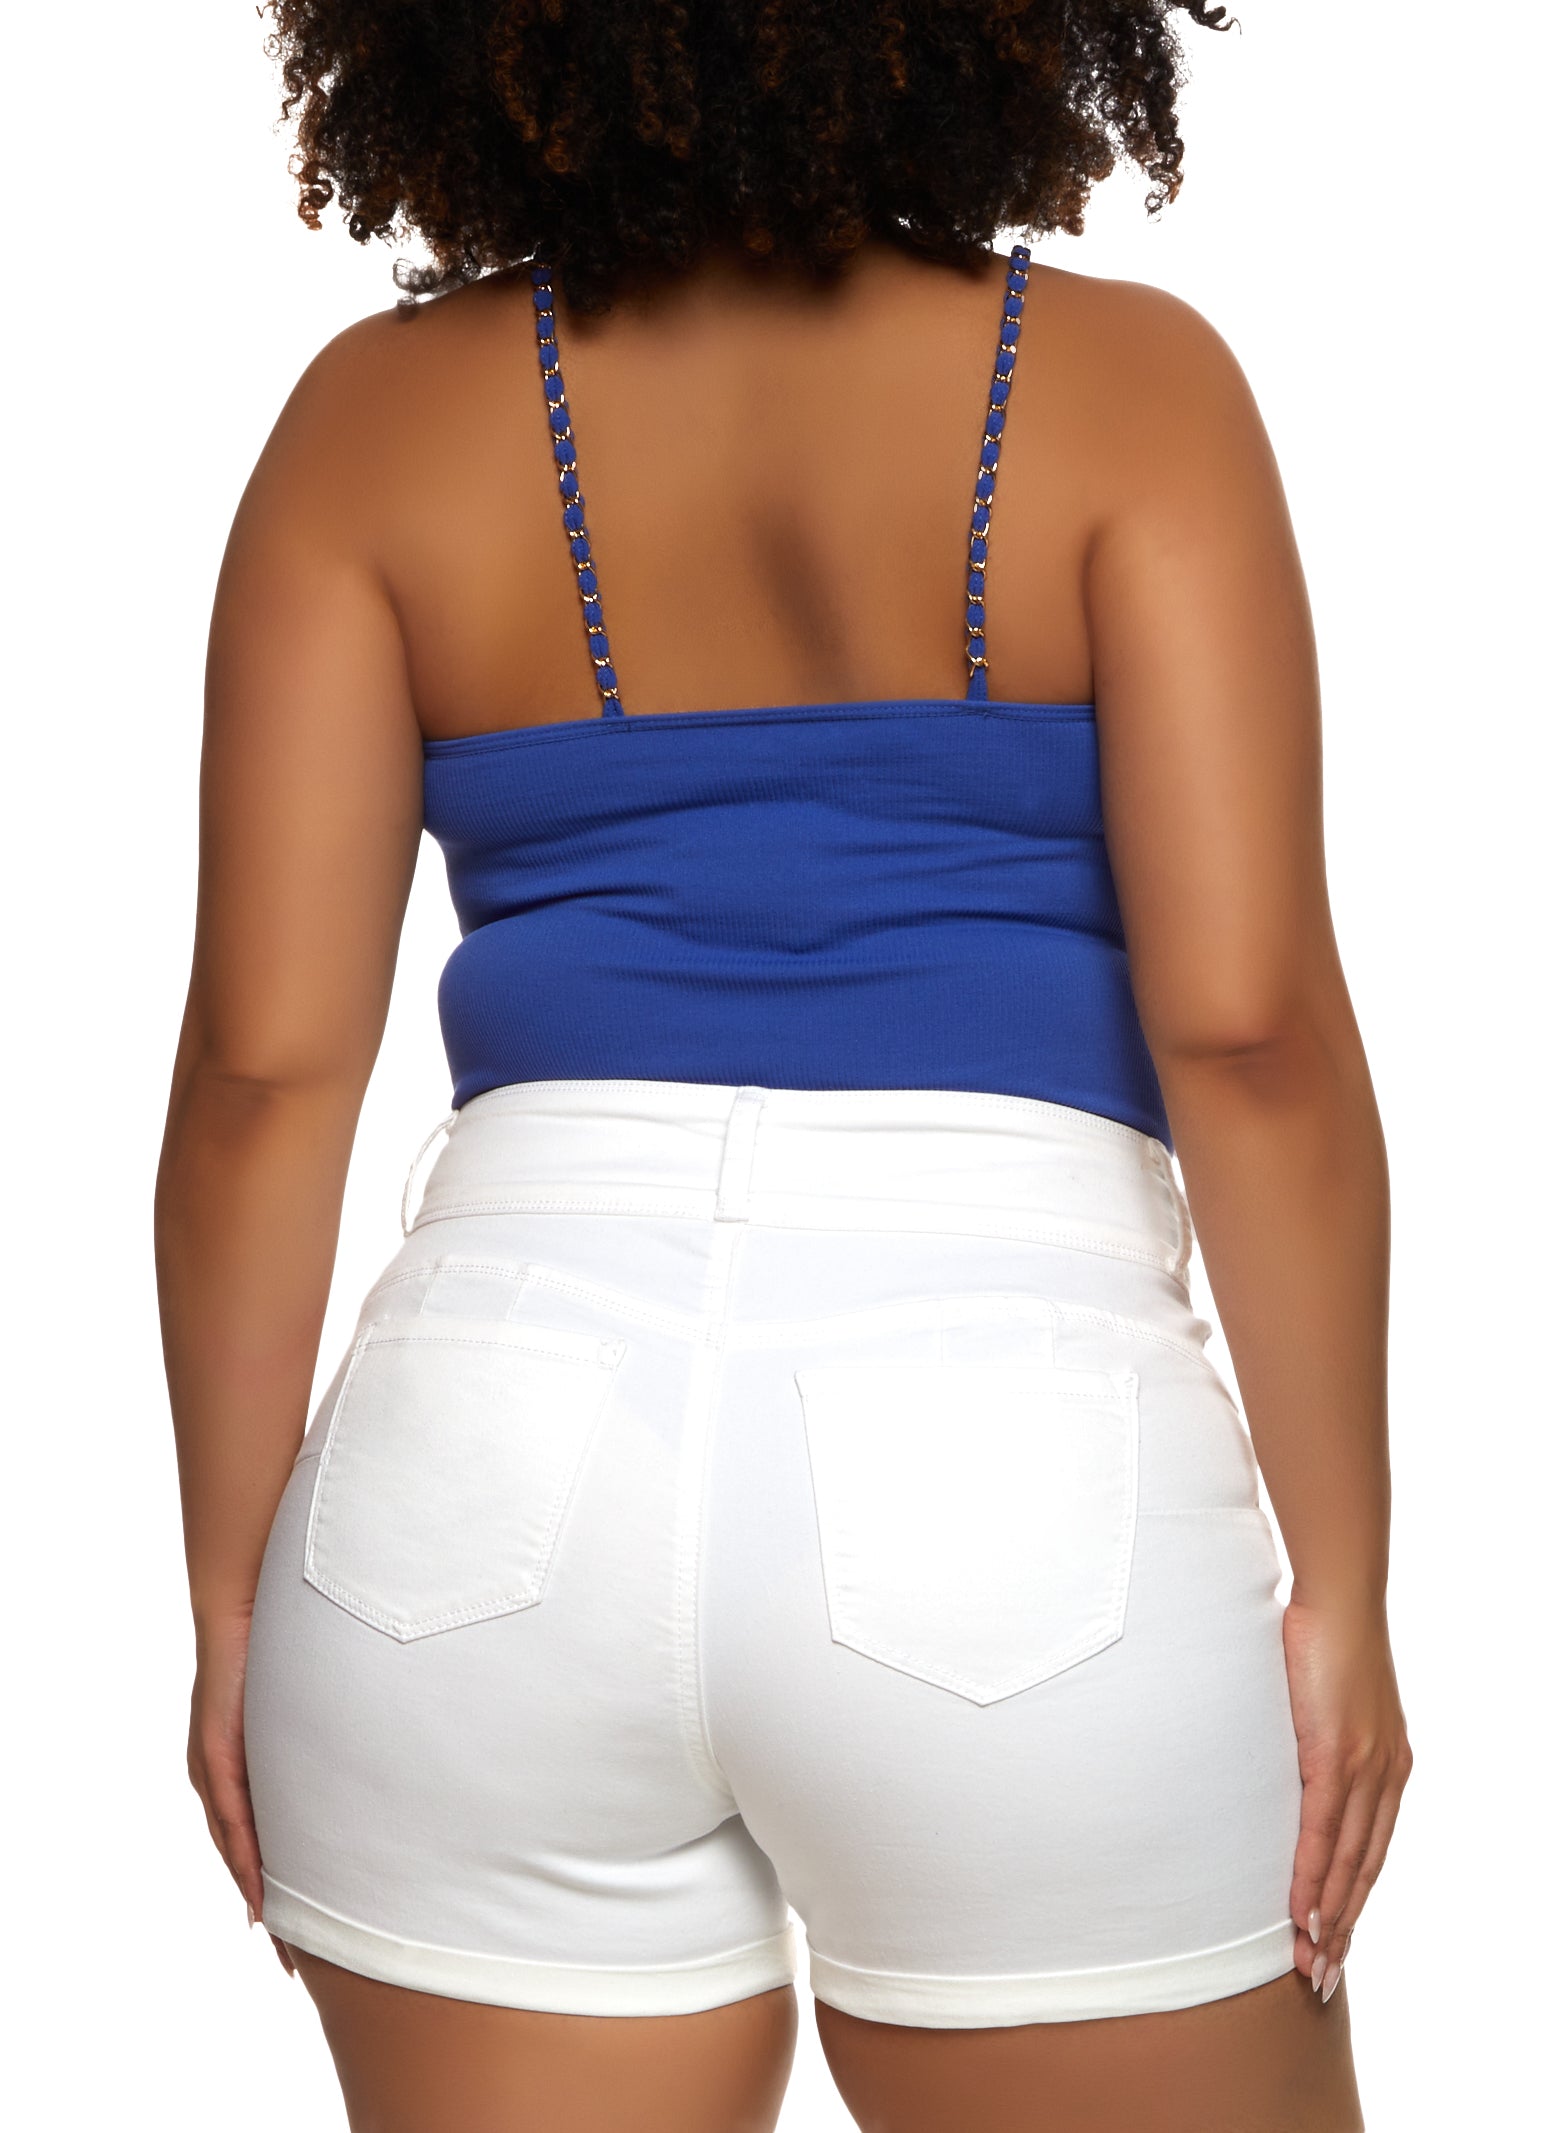 Plus Size Body Contour Chain Strap Cami Bodysuit - White